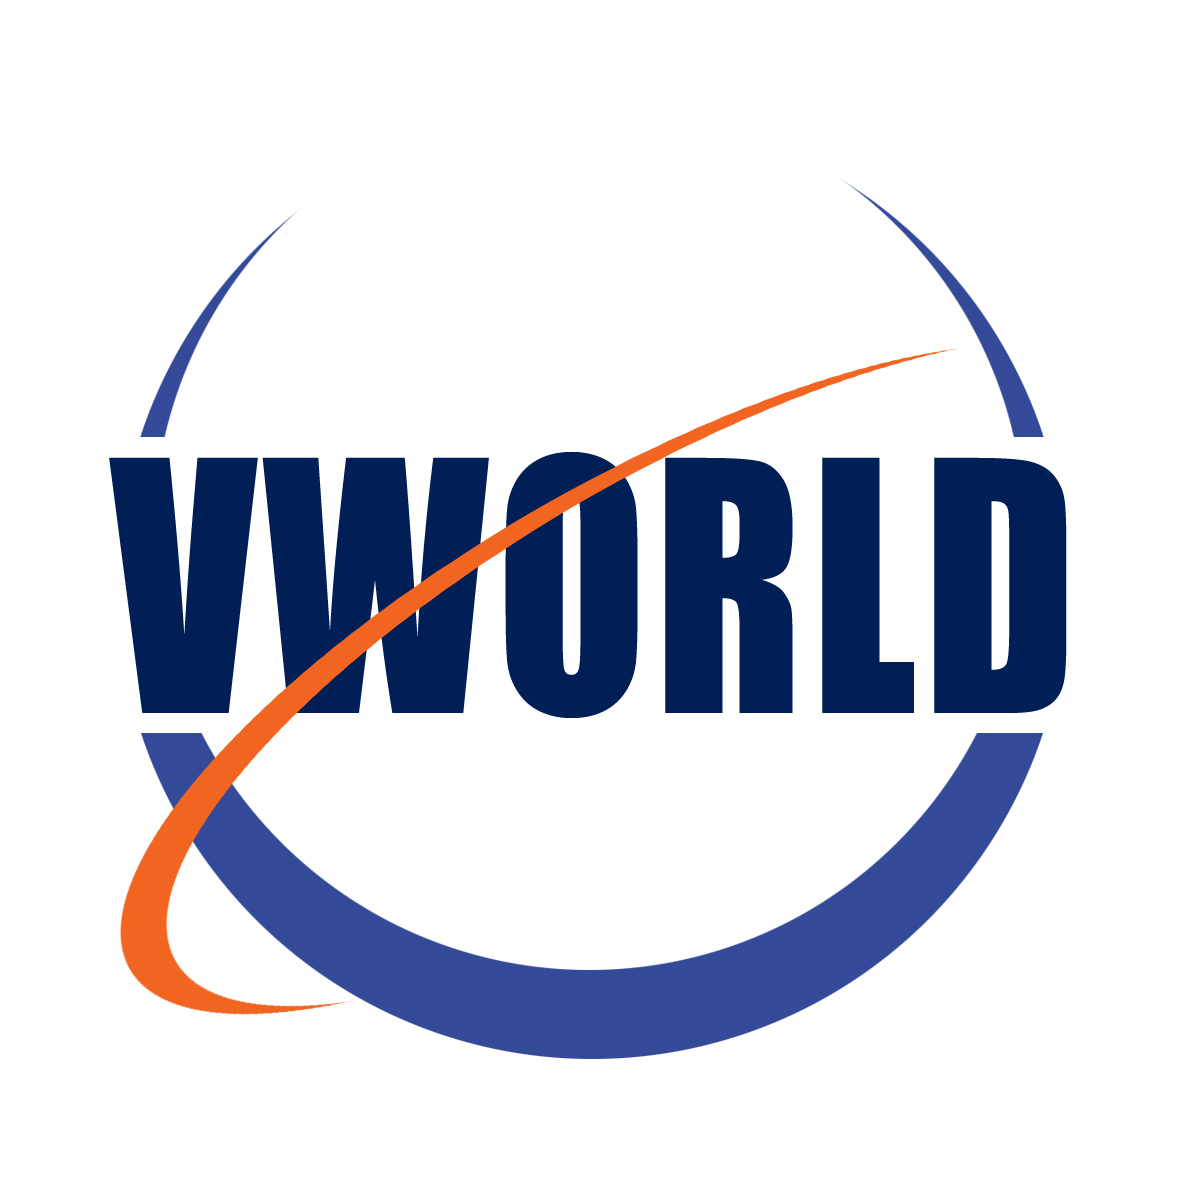 VWORLD Geospatial and Simulation company 